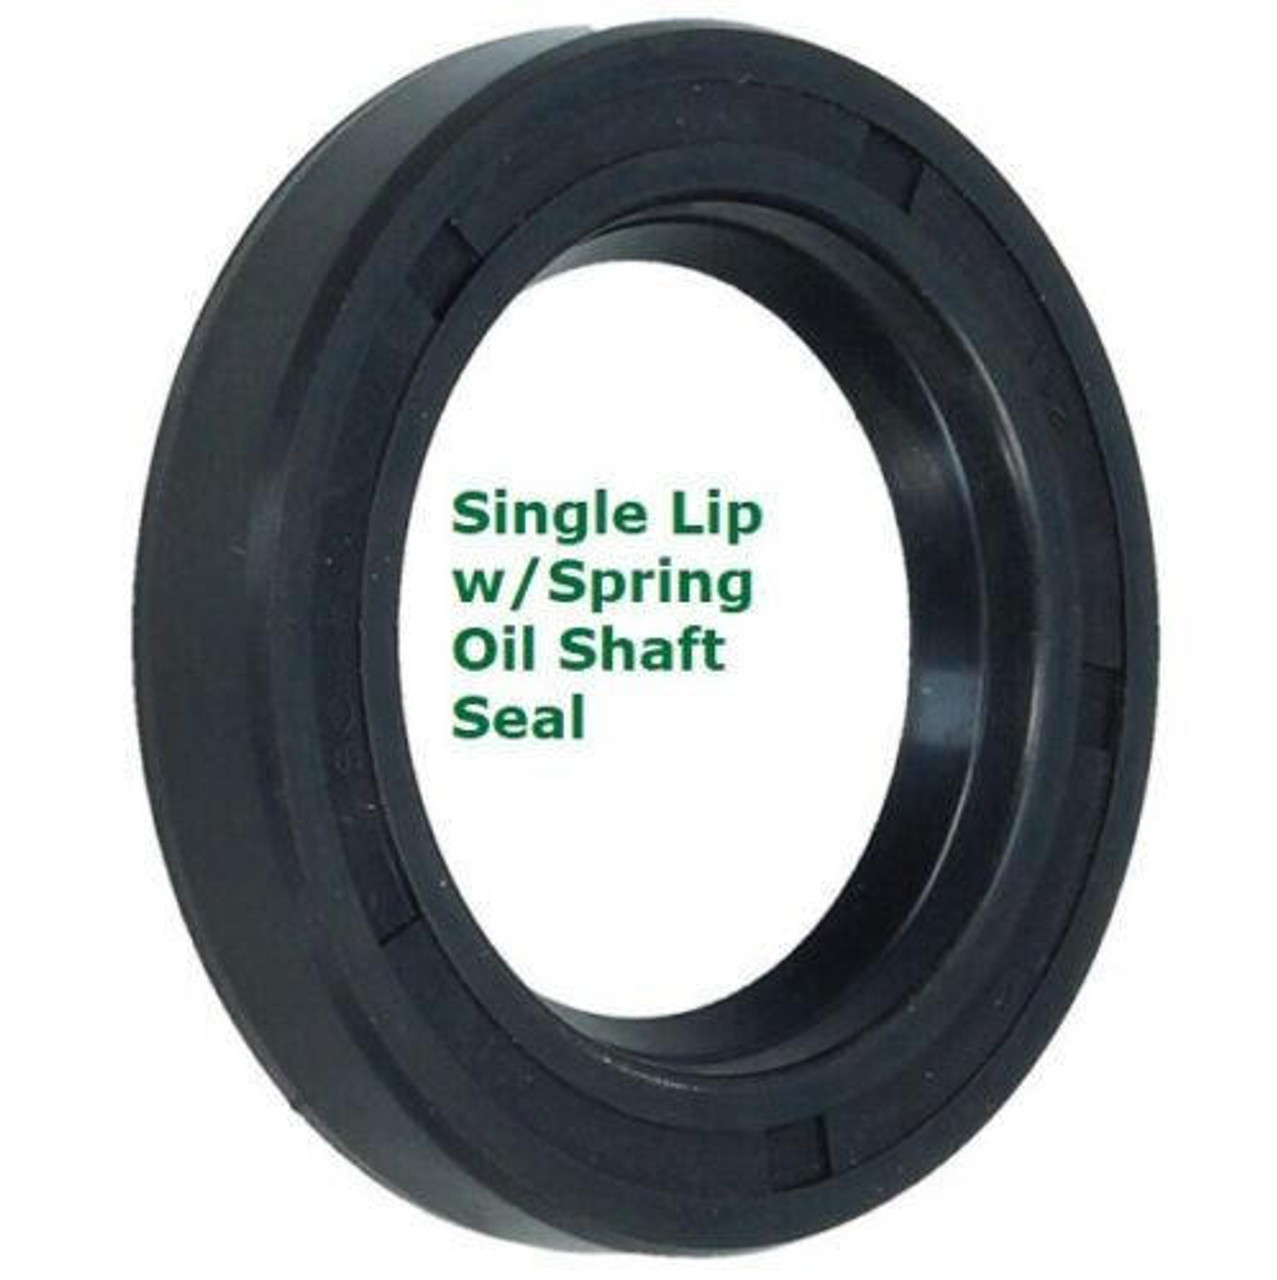 Metric Oil Shaft Seal 160 x 185 x 15mm   Single Lip   Price for 1 pc